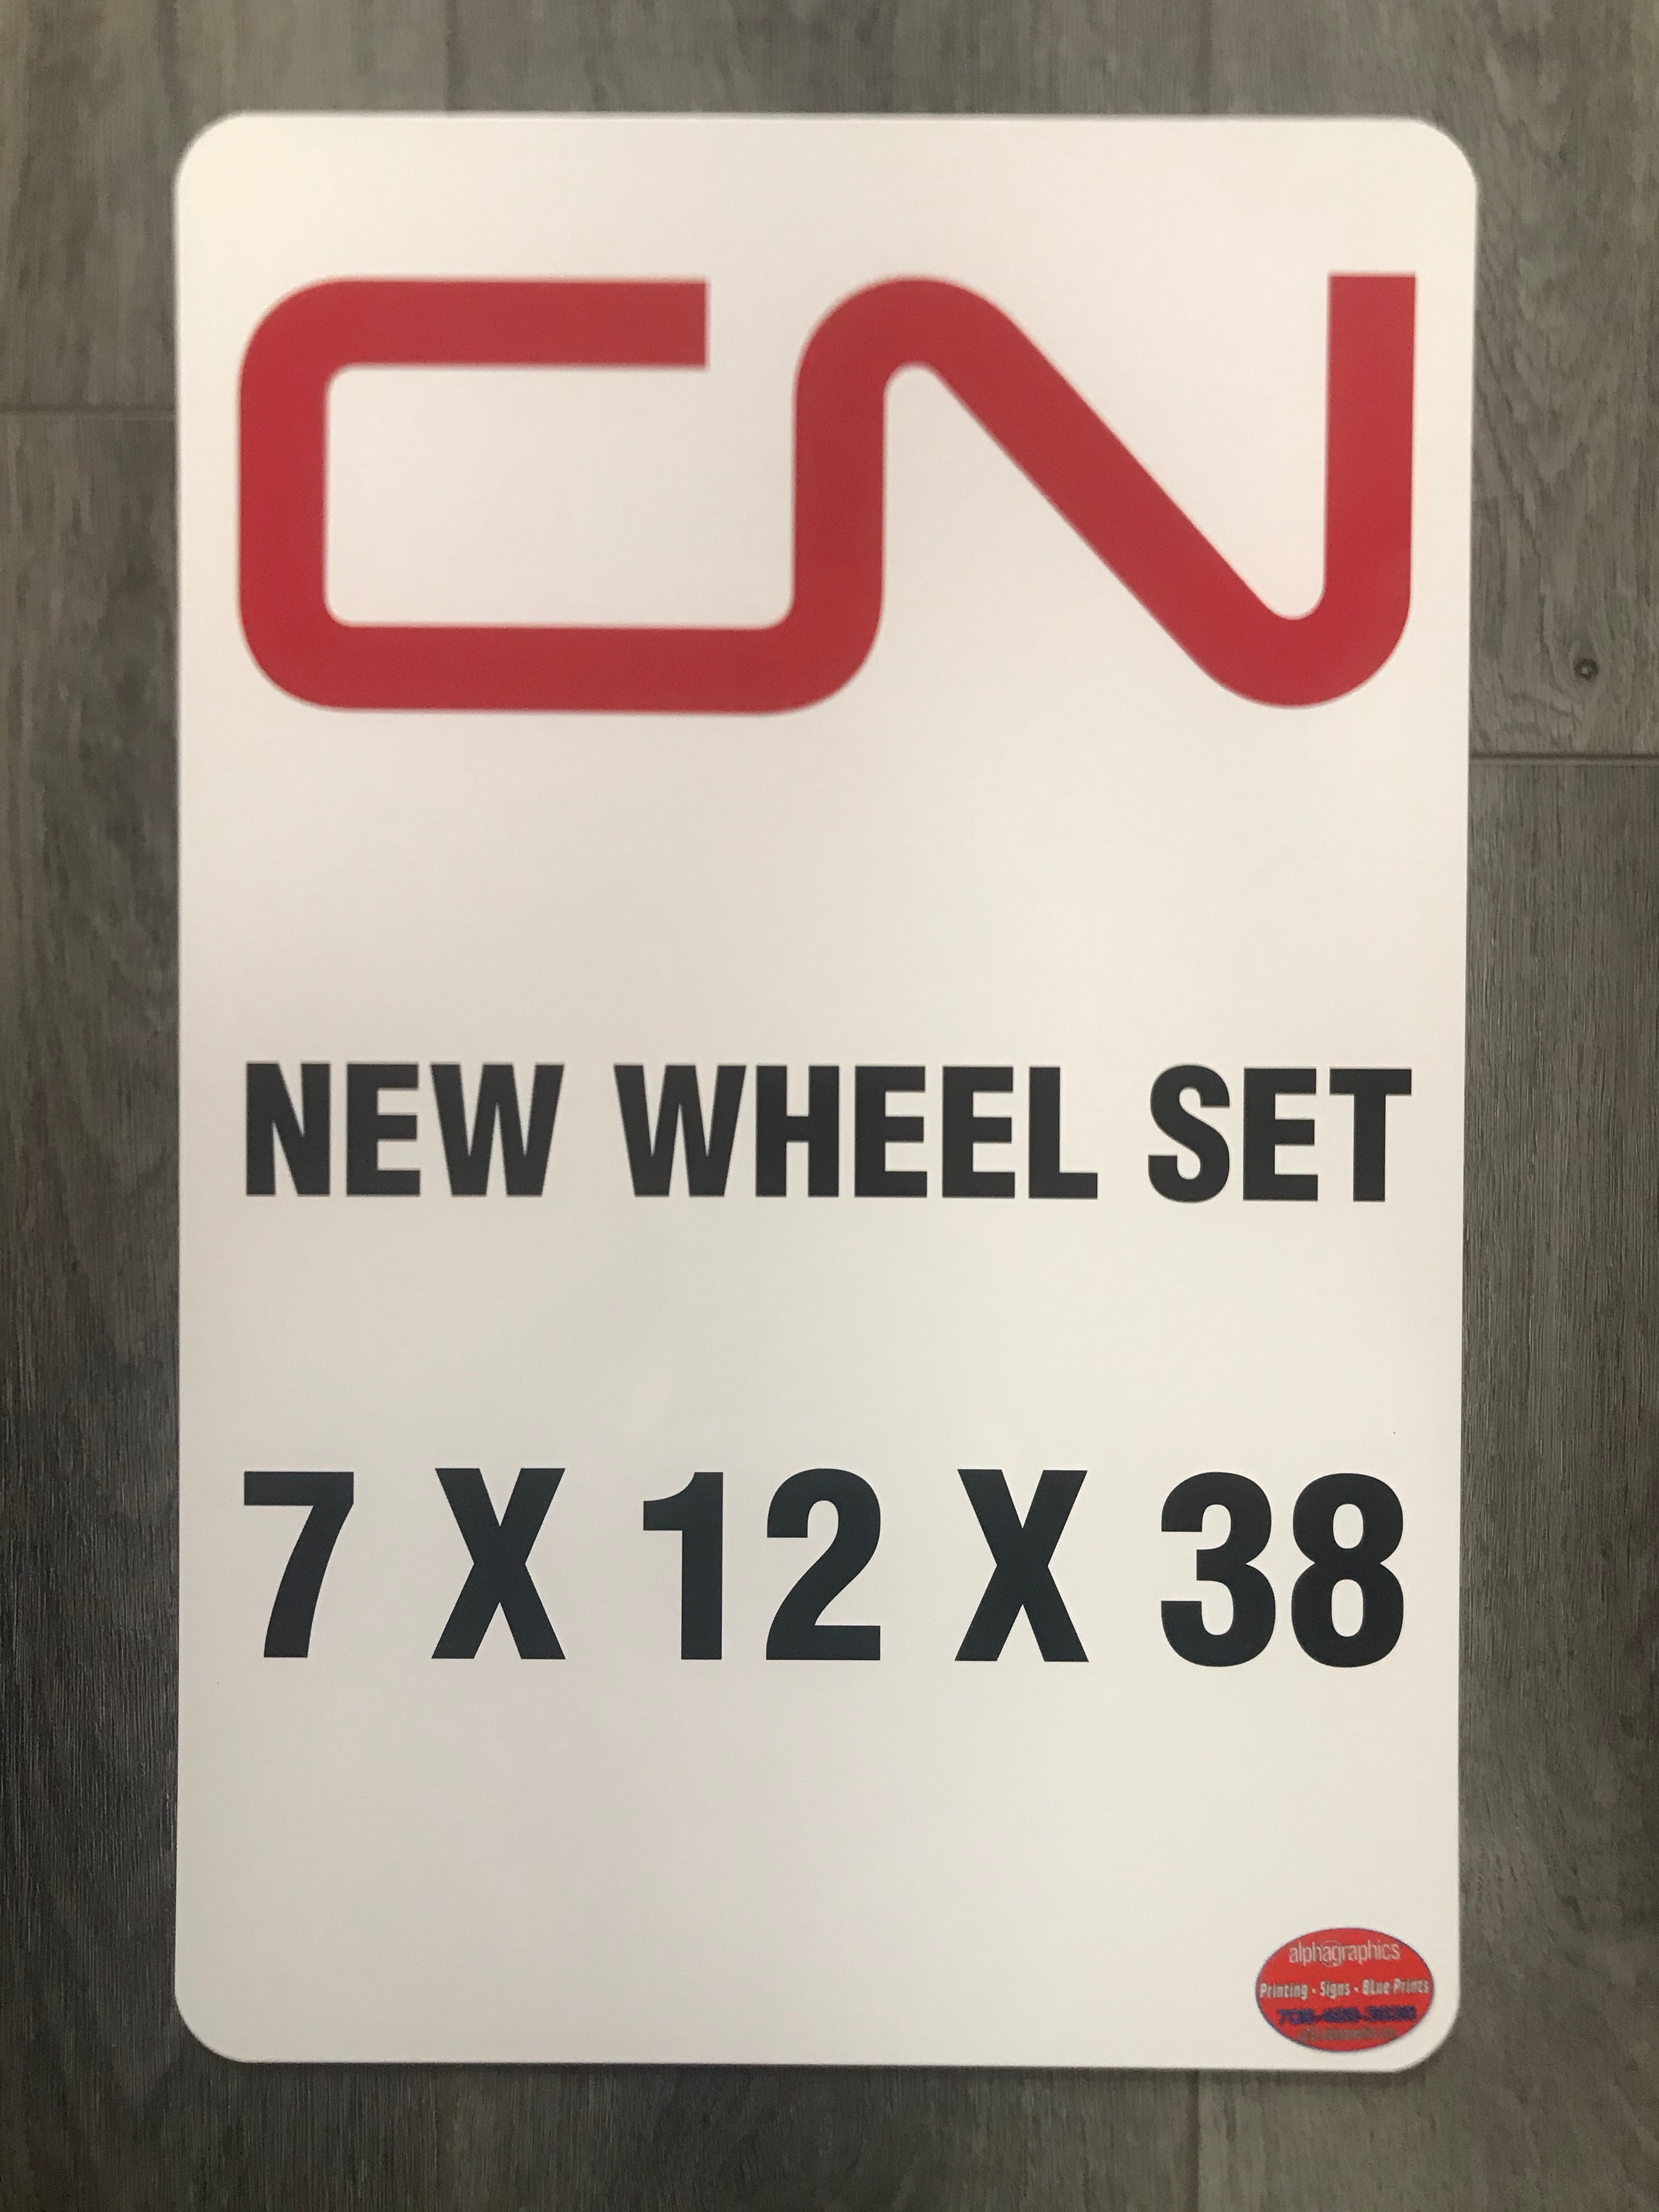 new-wheel-set-7x12x38.jpeg